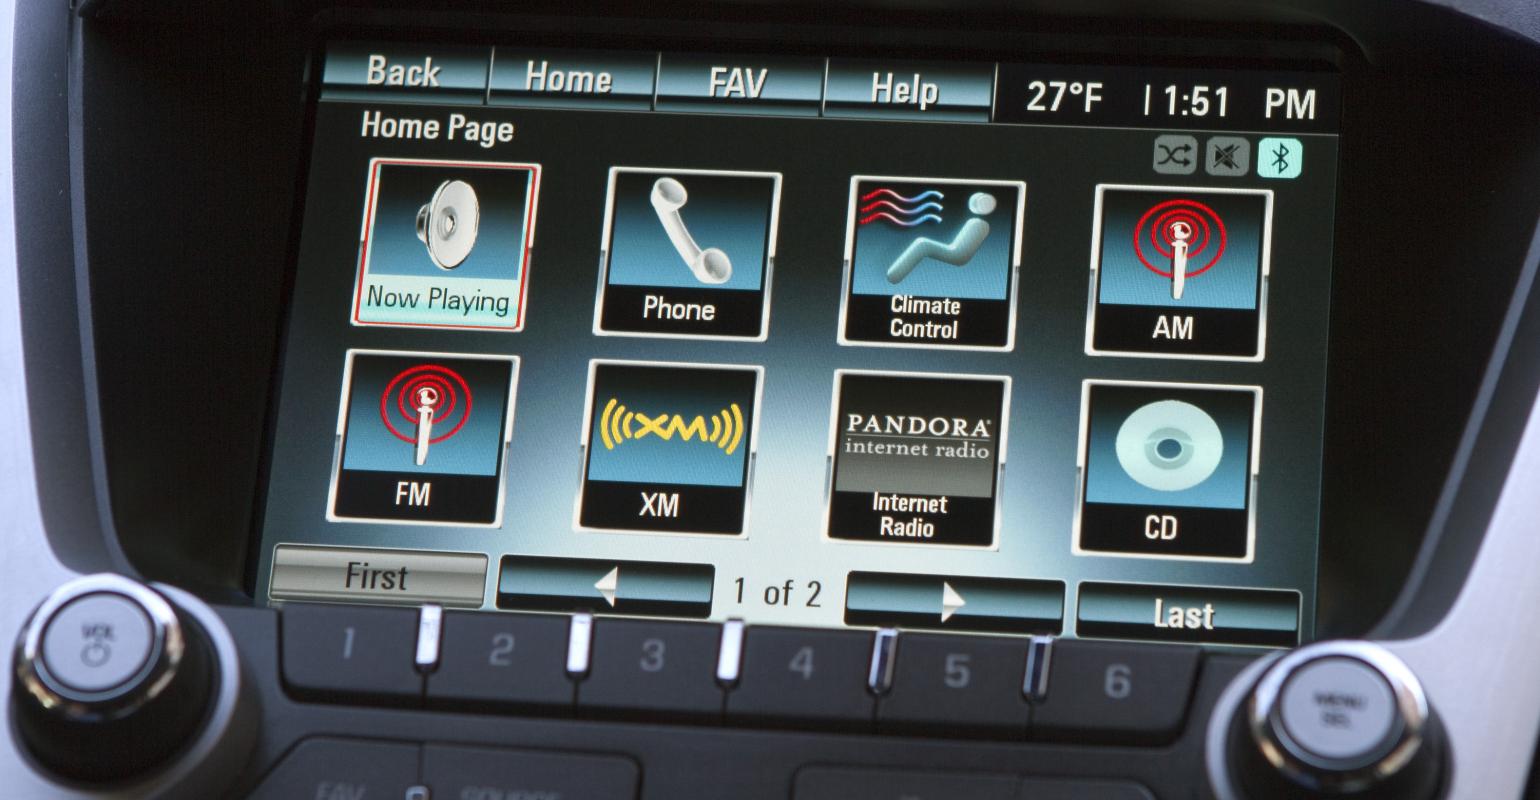 Chevrolet39s MyLink infotainment system